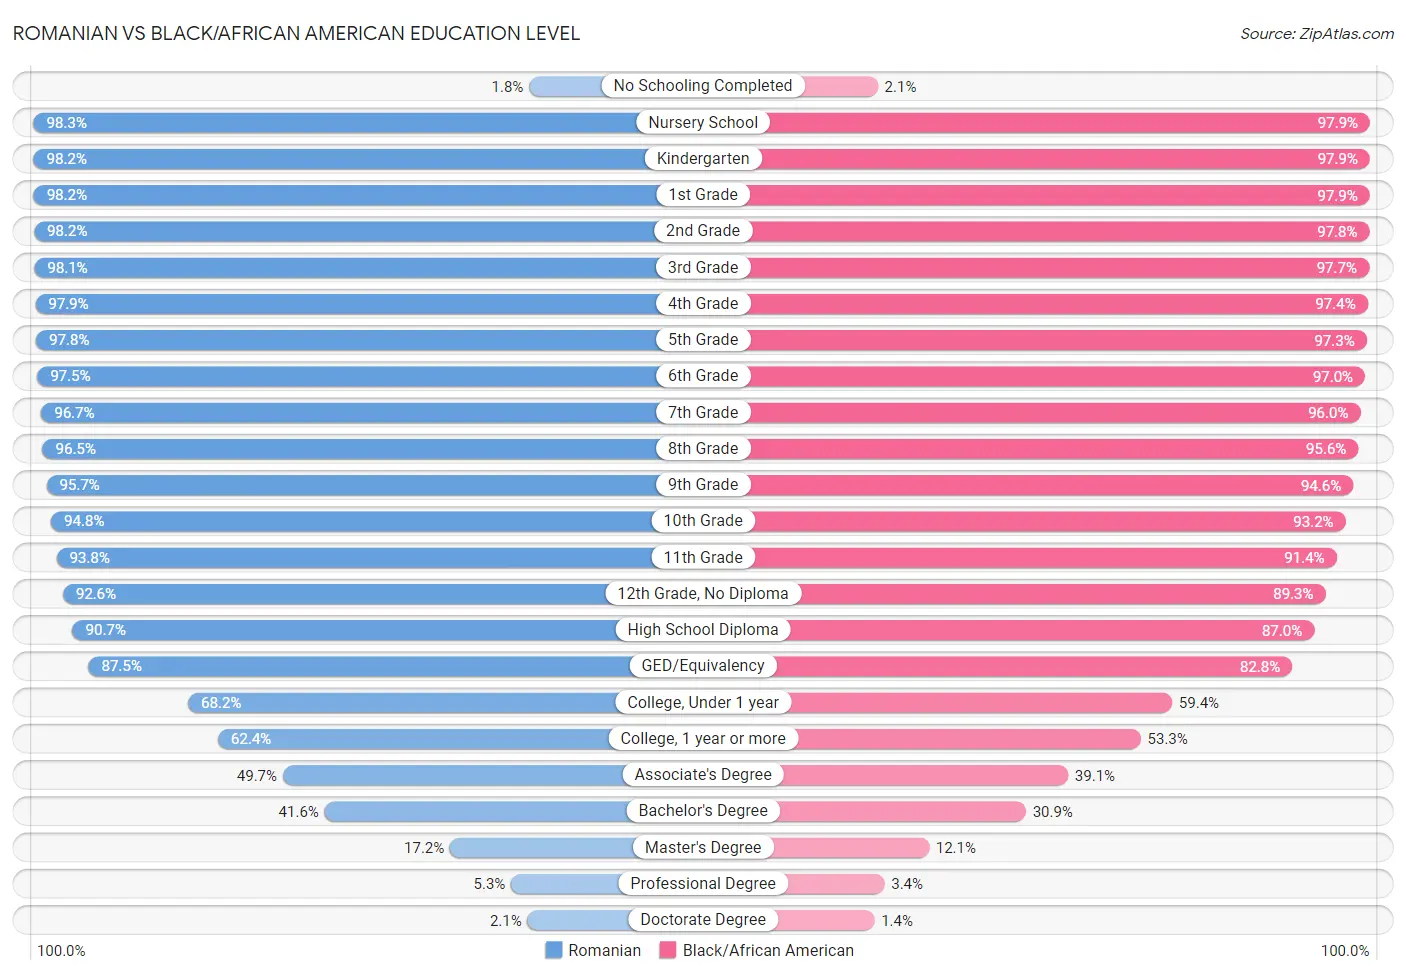 Romanian vs Black/African American Education Level